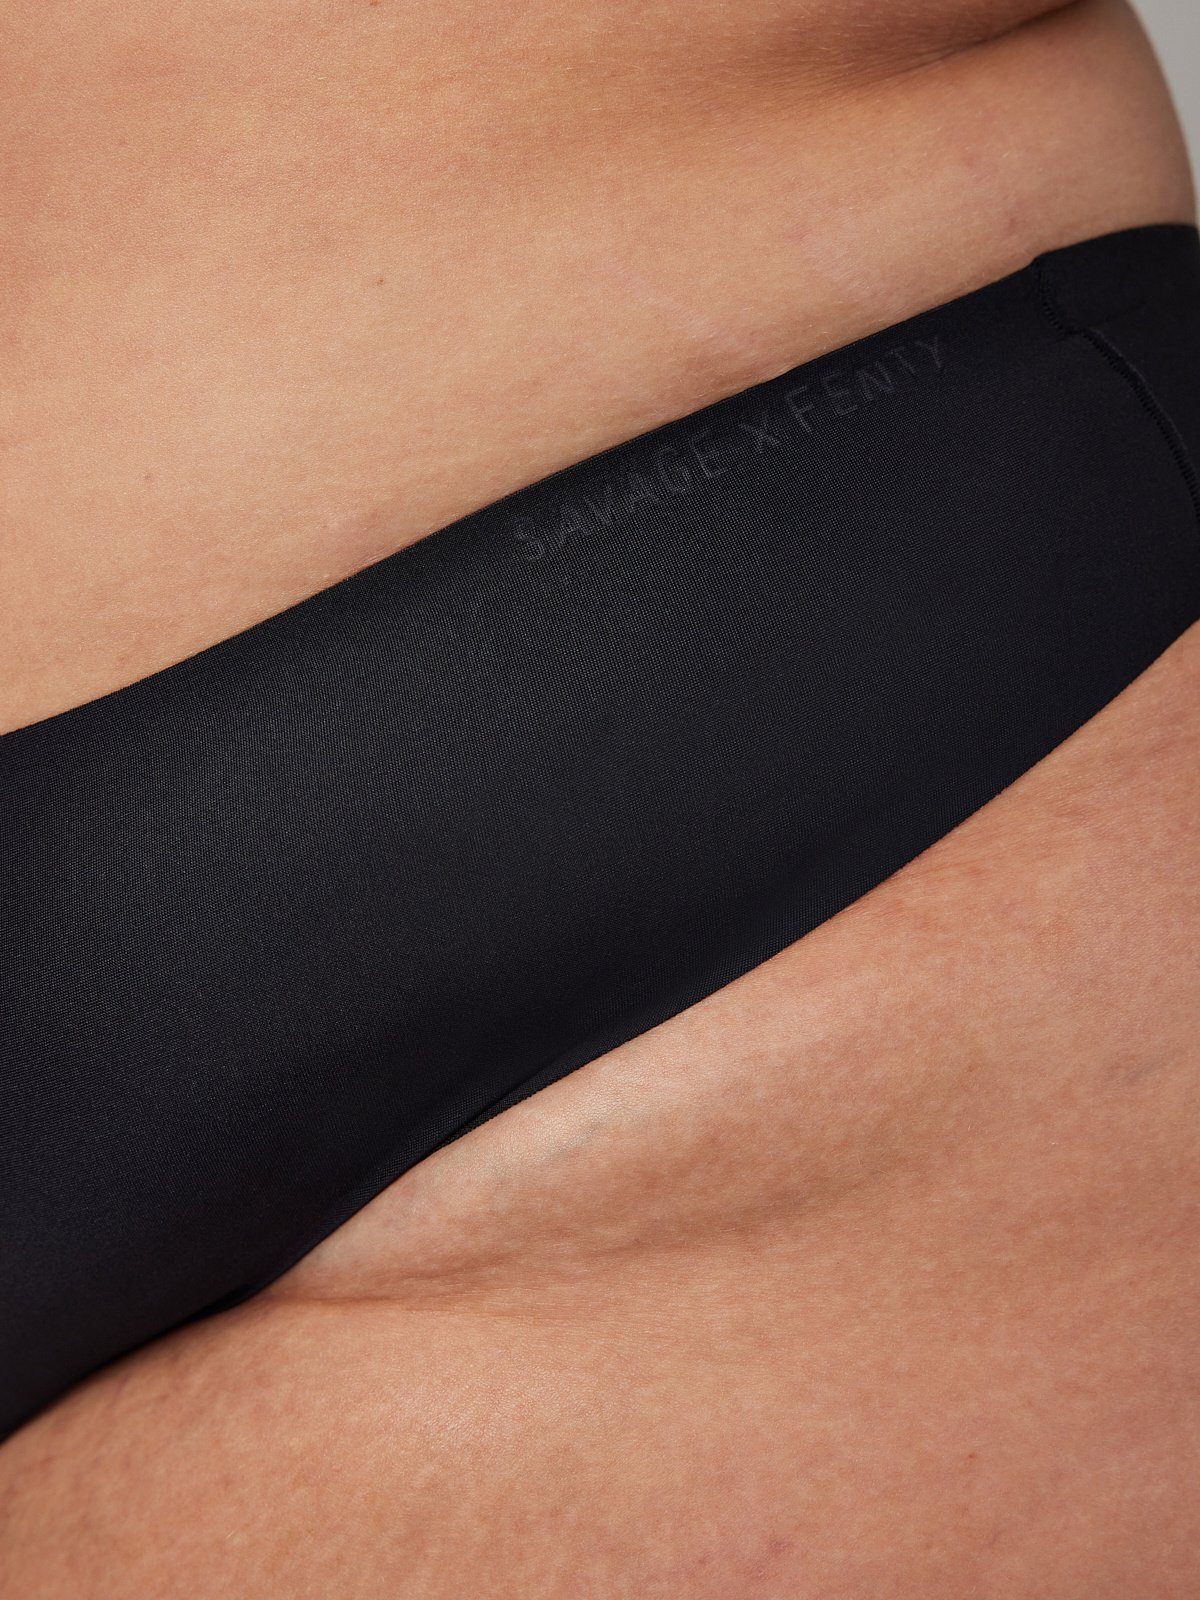 NEW Microfiber Thong Panty in Black